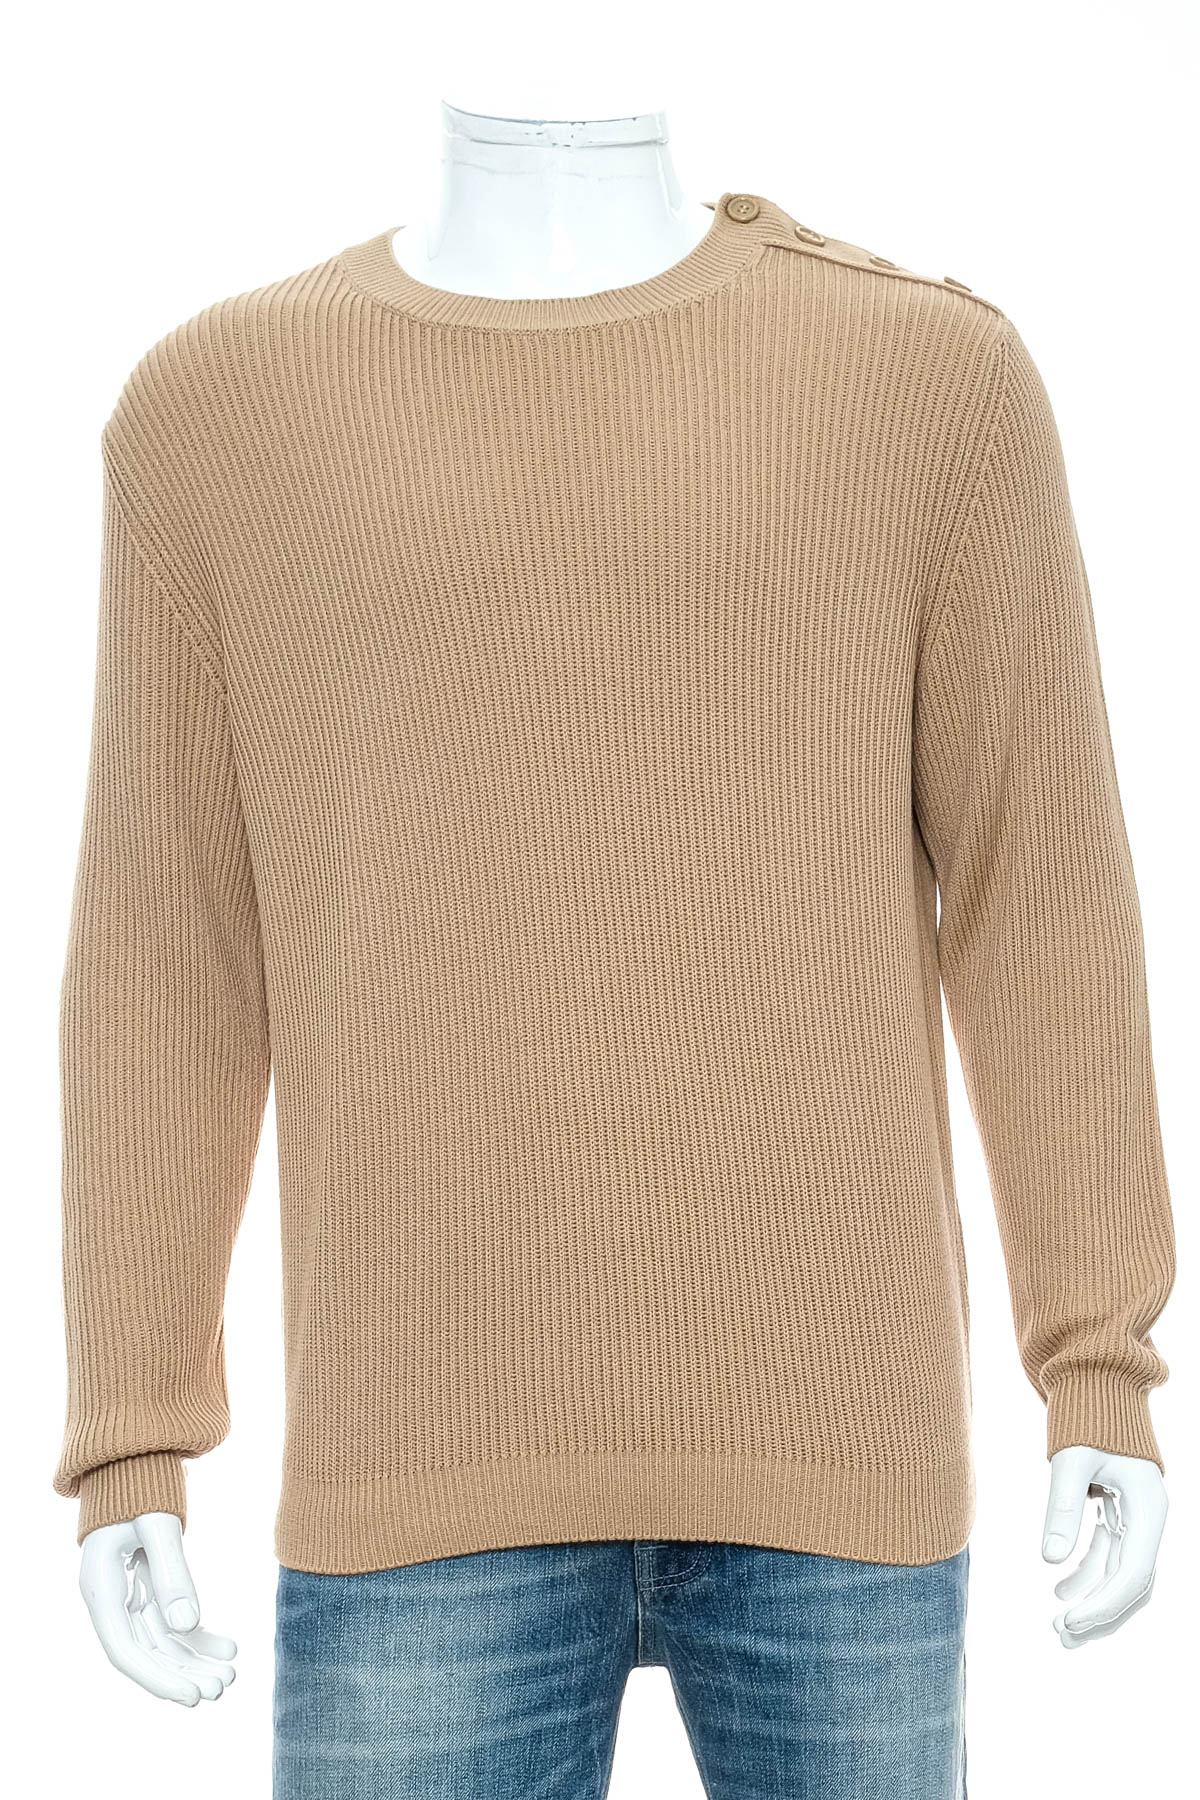 Men's sweater - United Colors of Benetton - 0